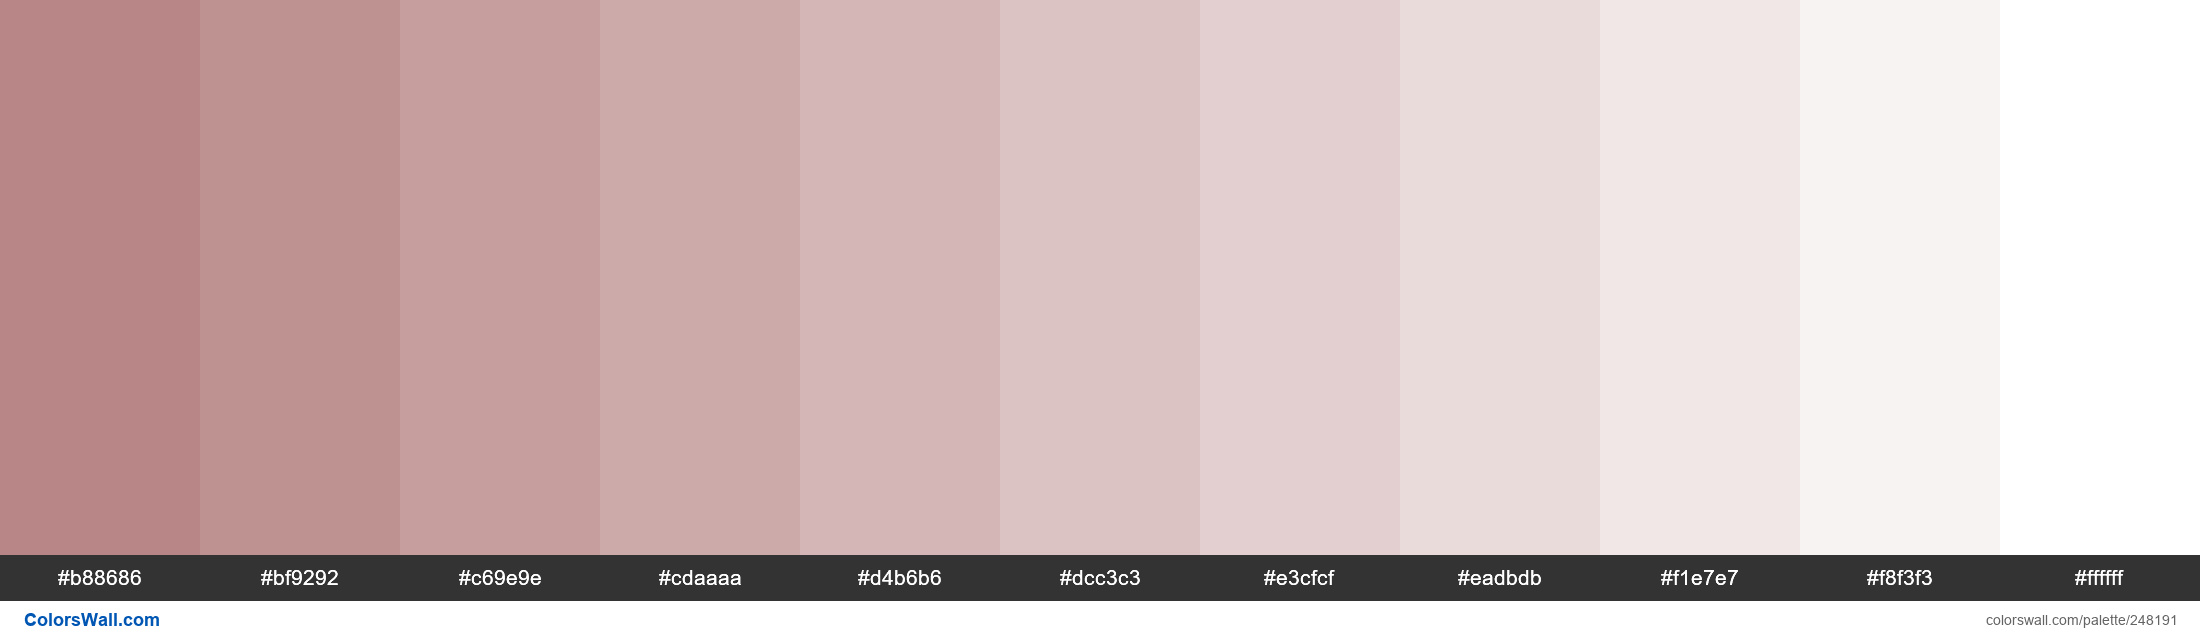 Bashful Rose colors palette - ColorsWall